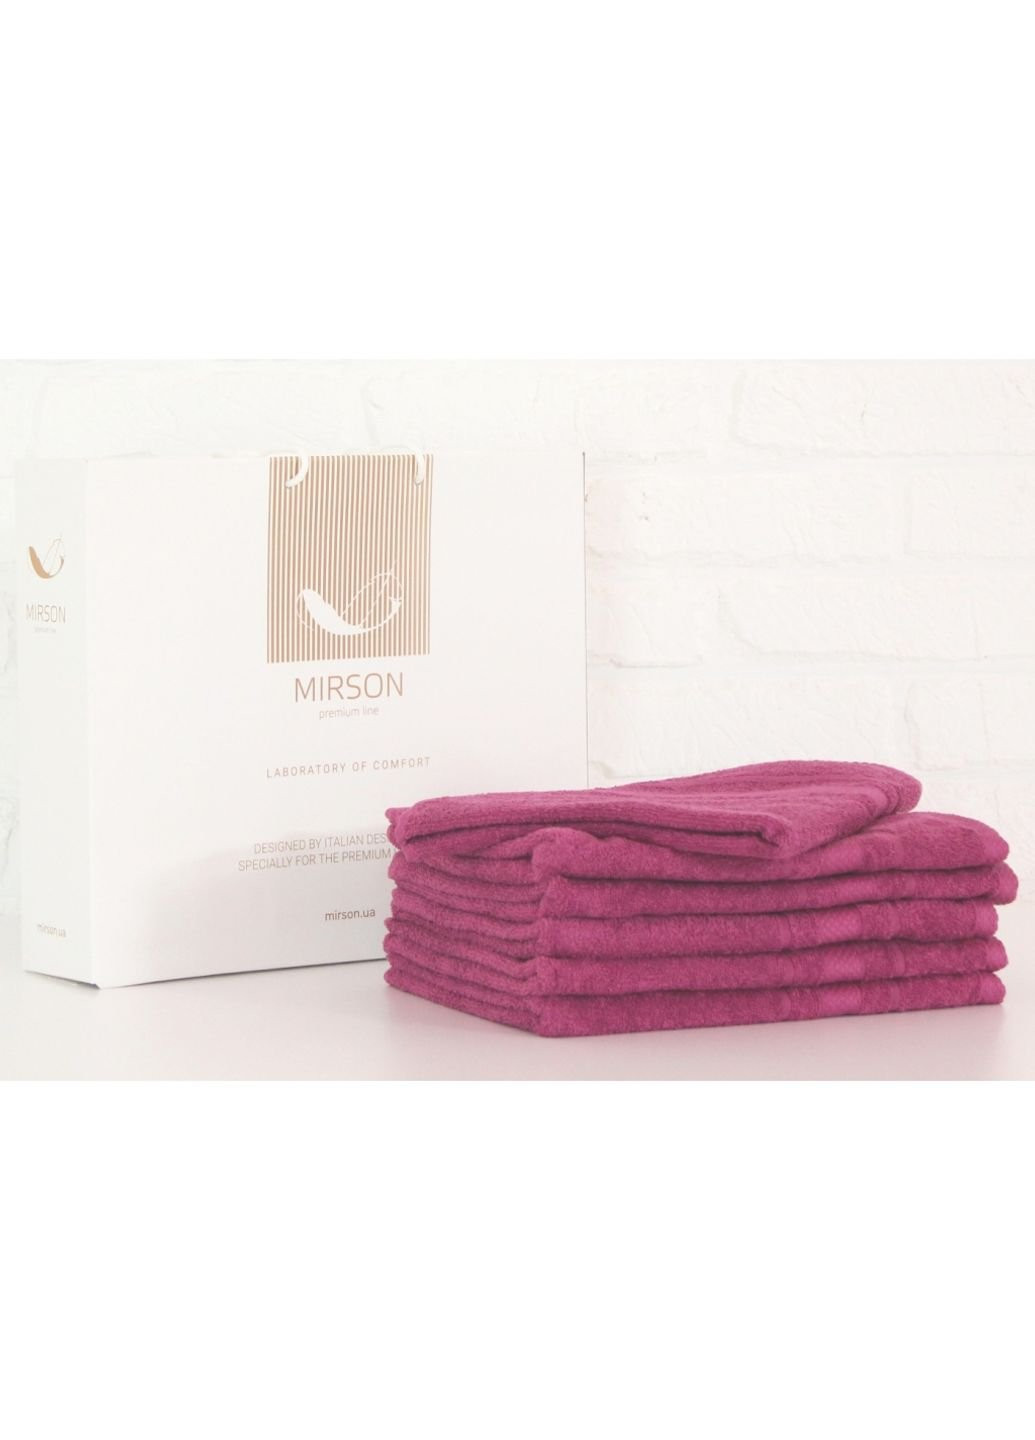 Mirson полотенце набор банных №5081 elite softness plum 50х90 6 шт (2200003524055) малиновый производство - Украина